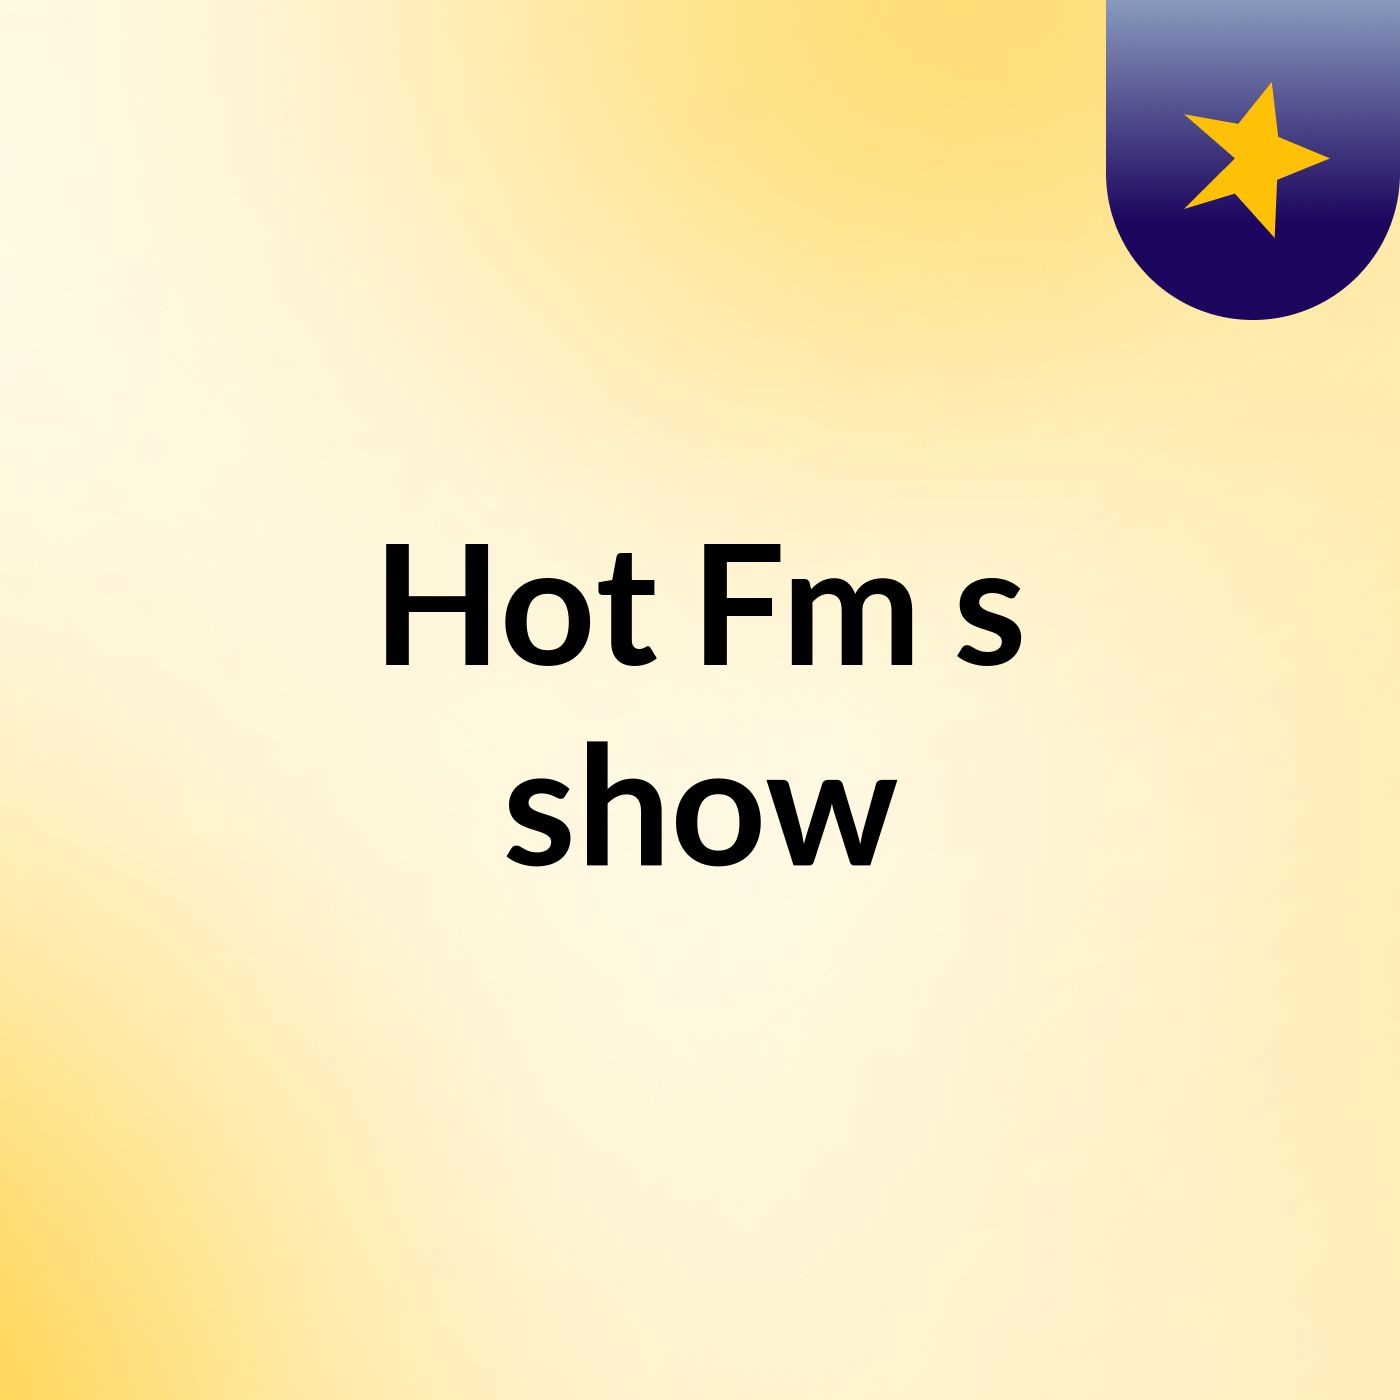 Hot Fm's show